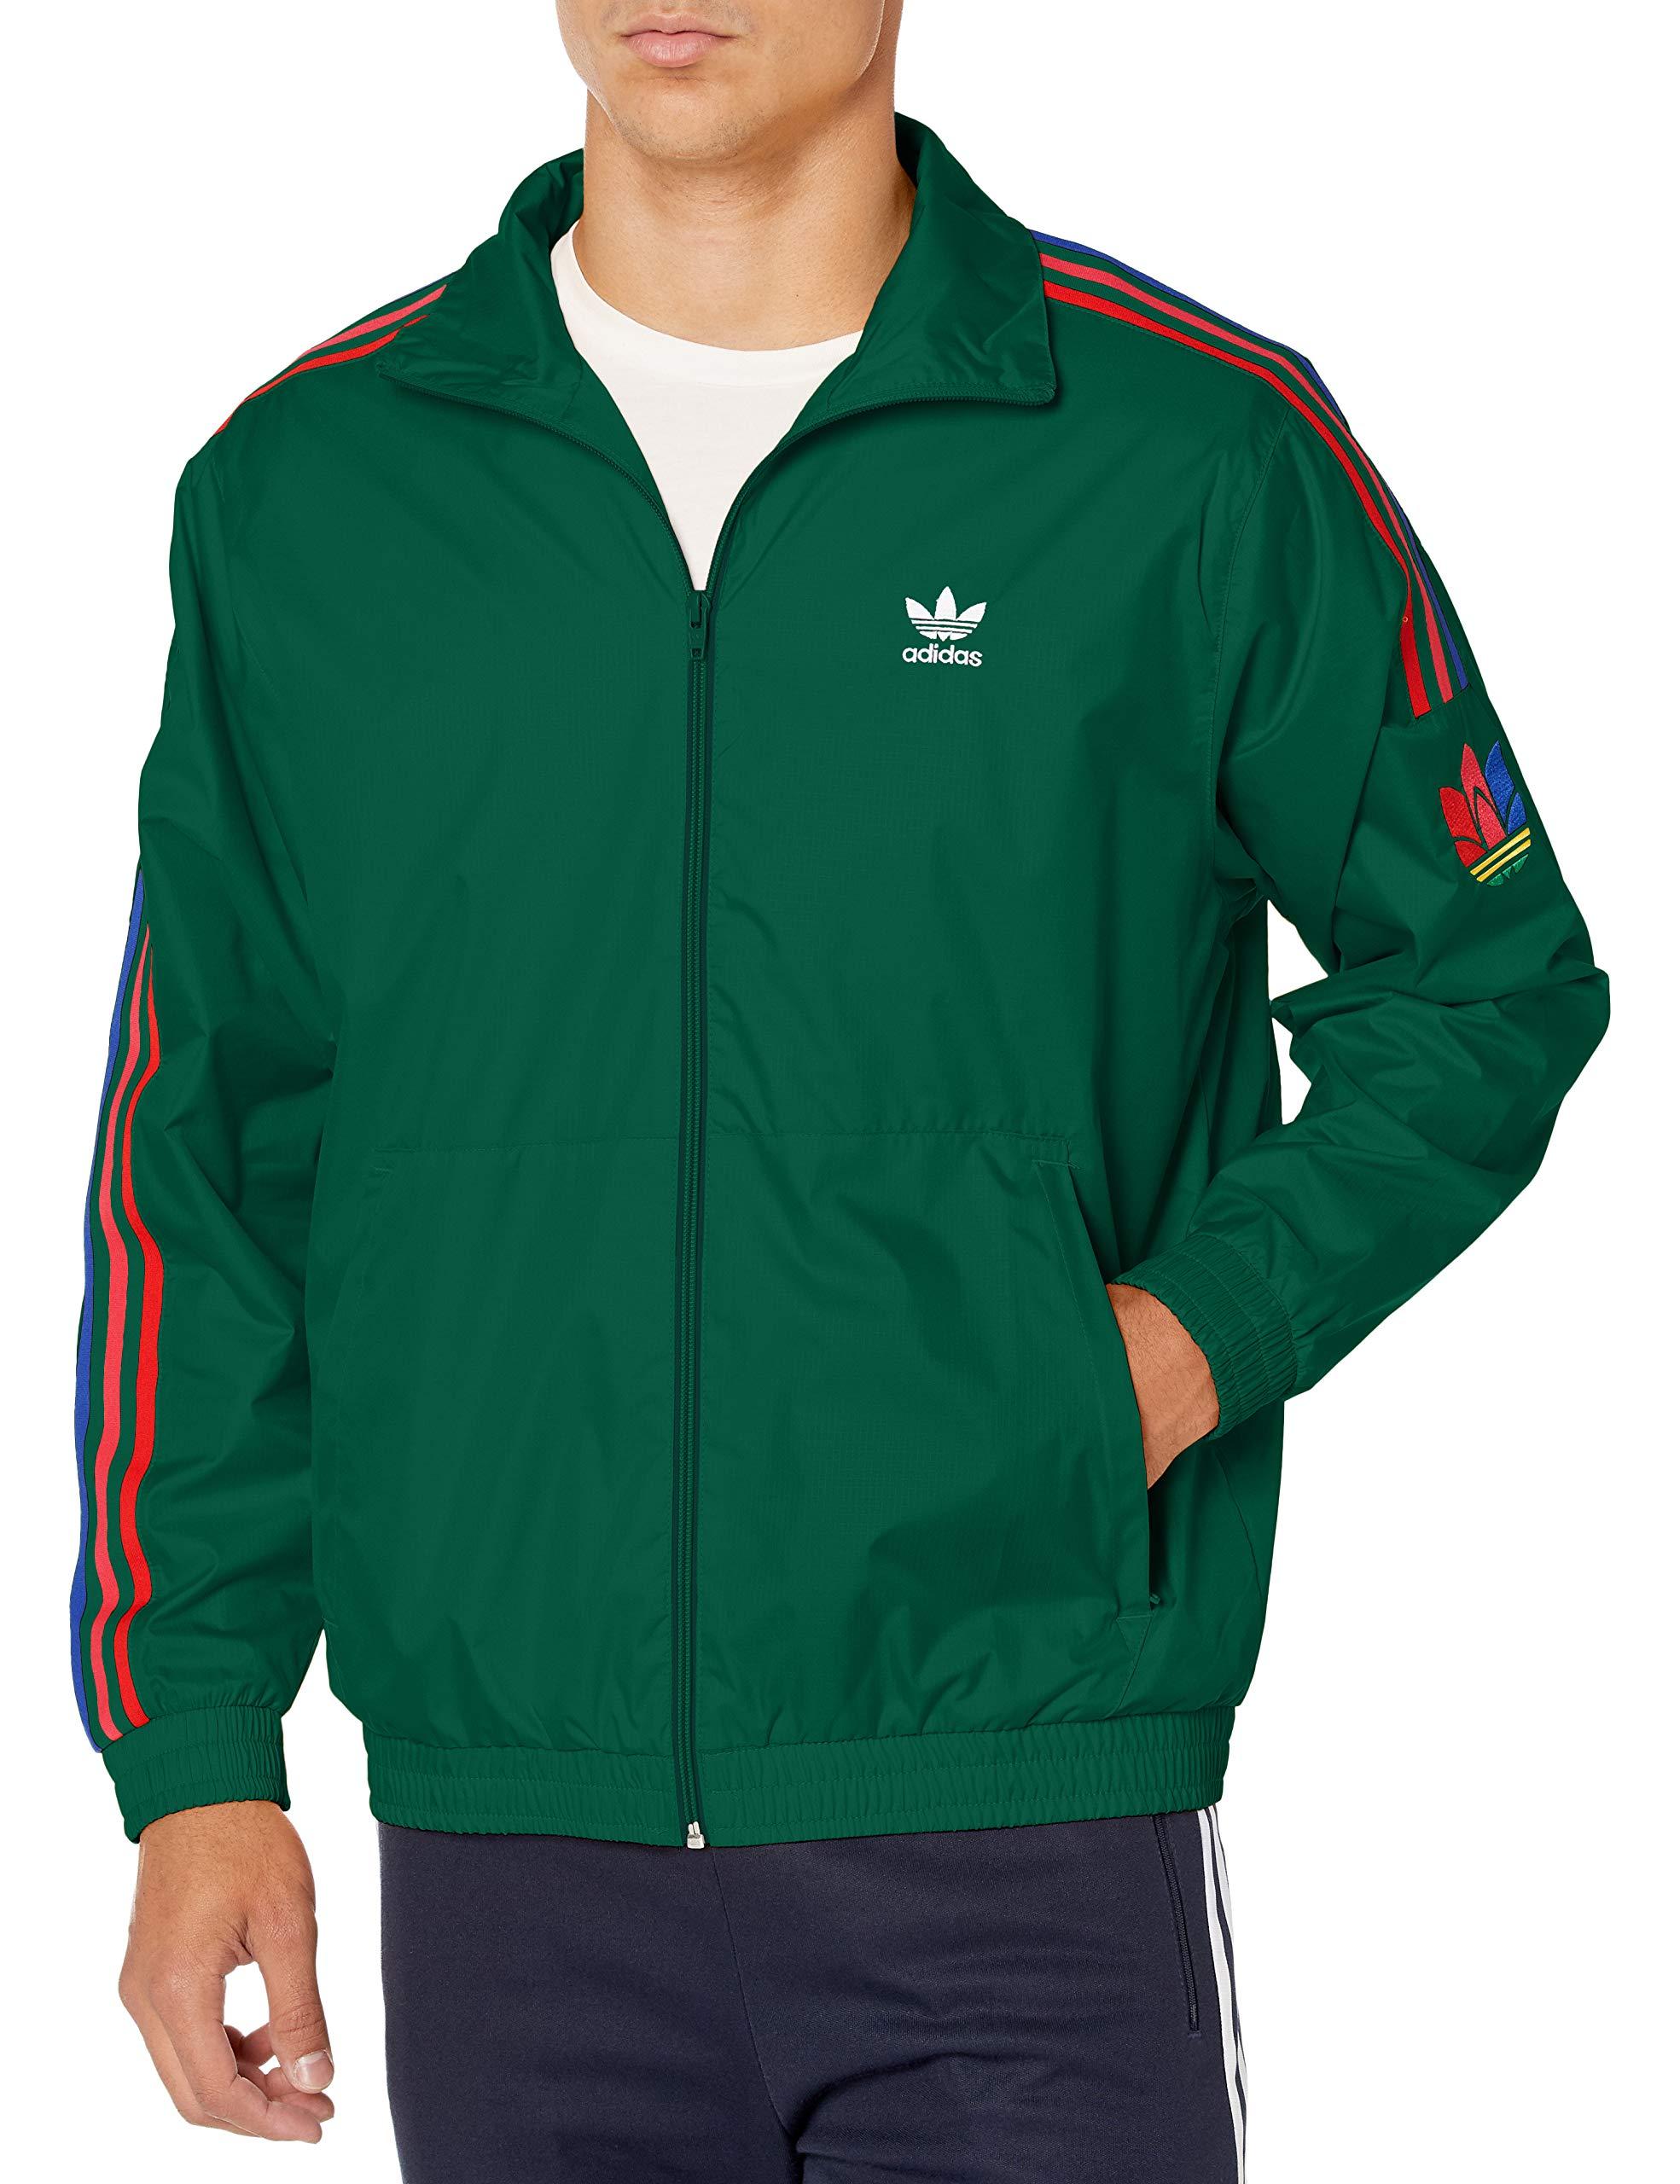 adidas Originals 3d Trefoil 3-stripes Track Jacket in Dark Green (Green